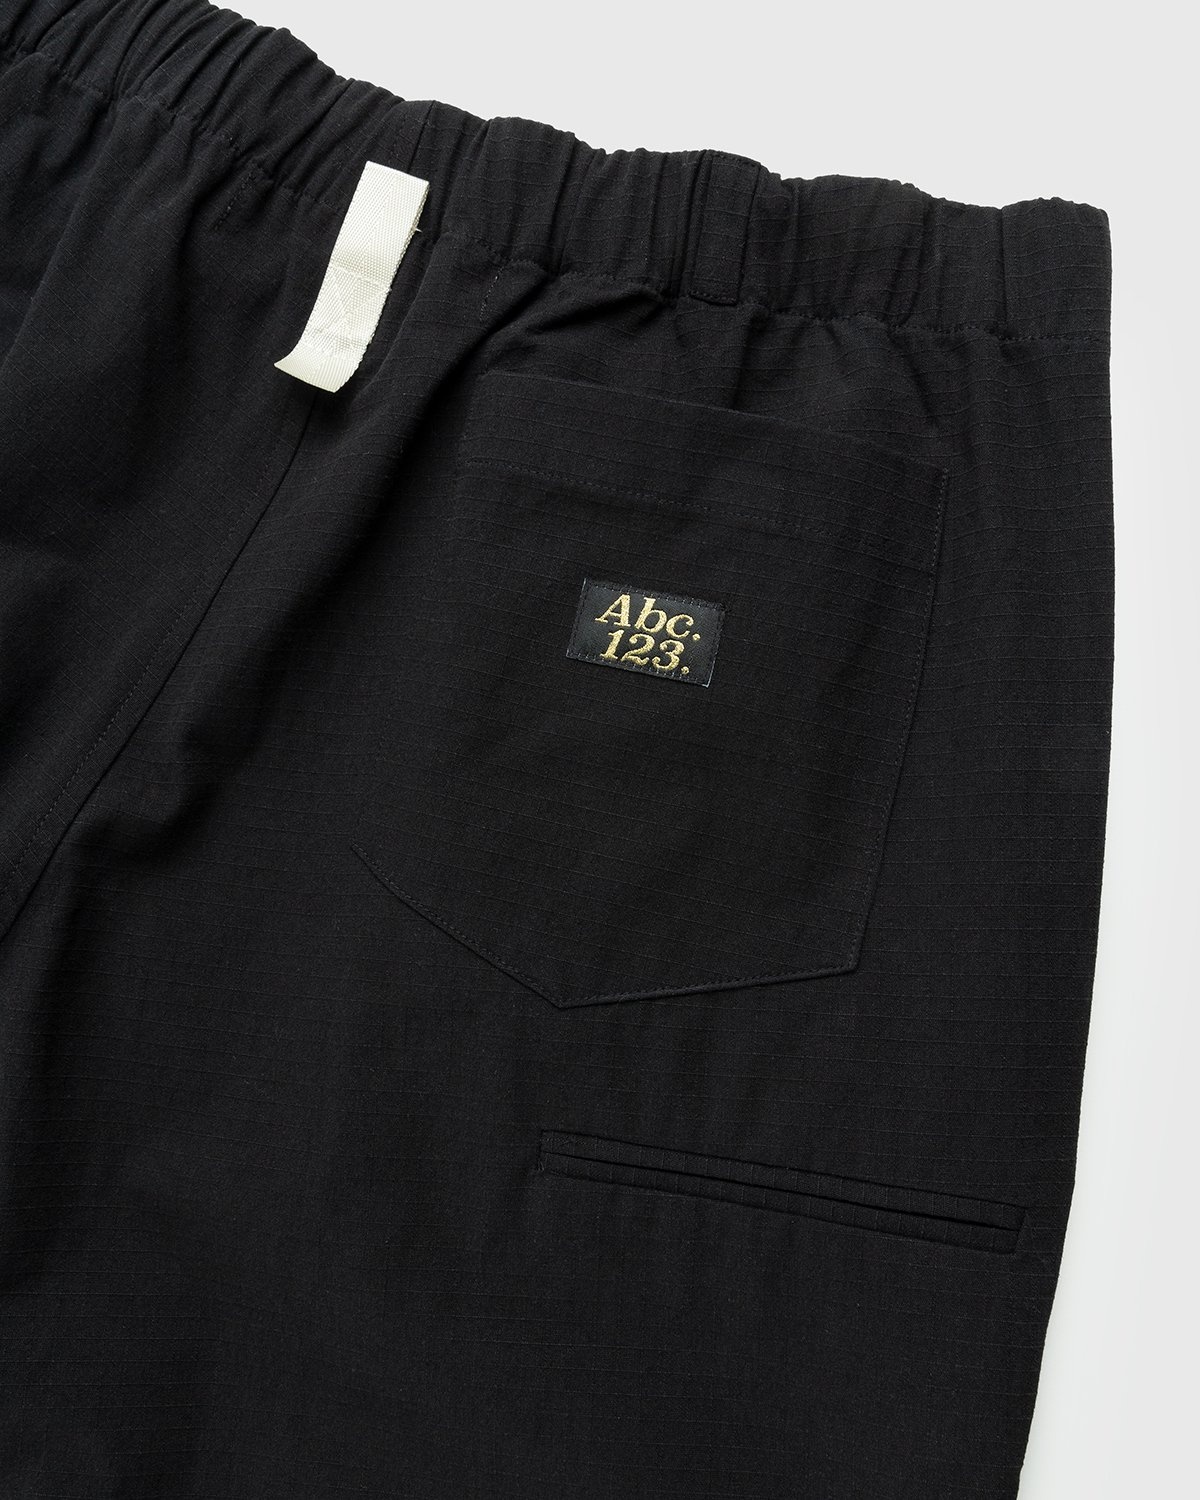 Abc. – Studio Work Pant Anthracite - Work Pants - Black - Image 3